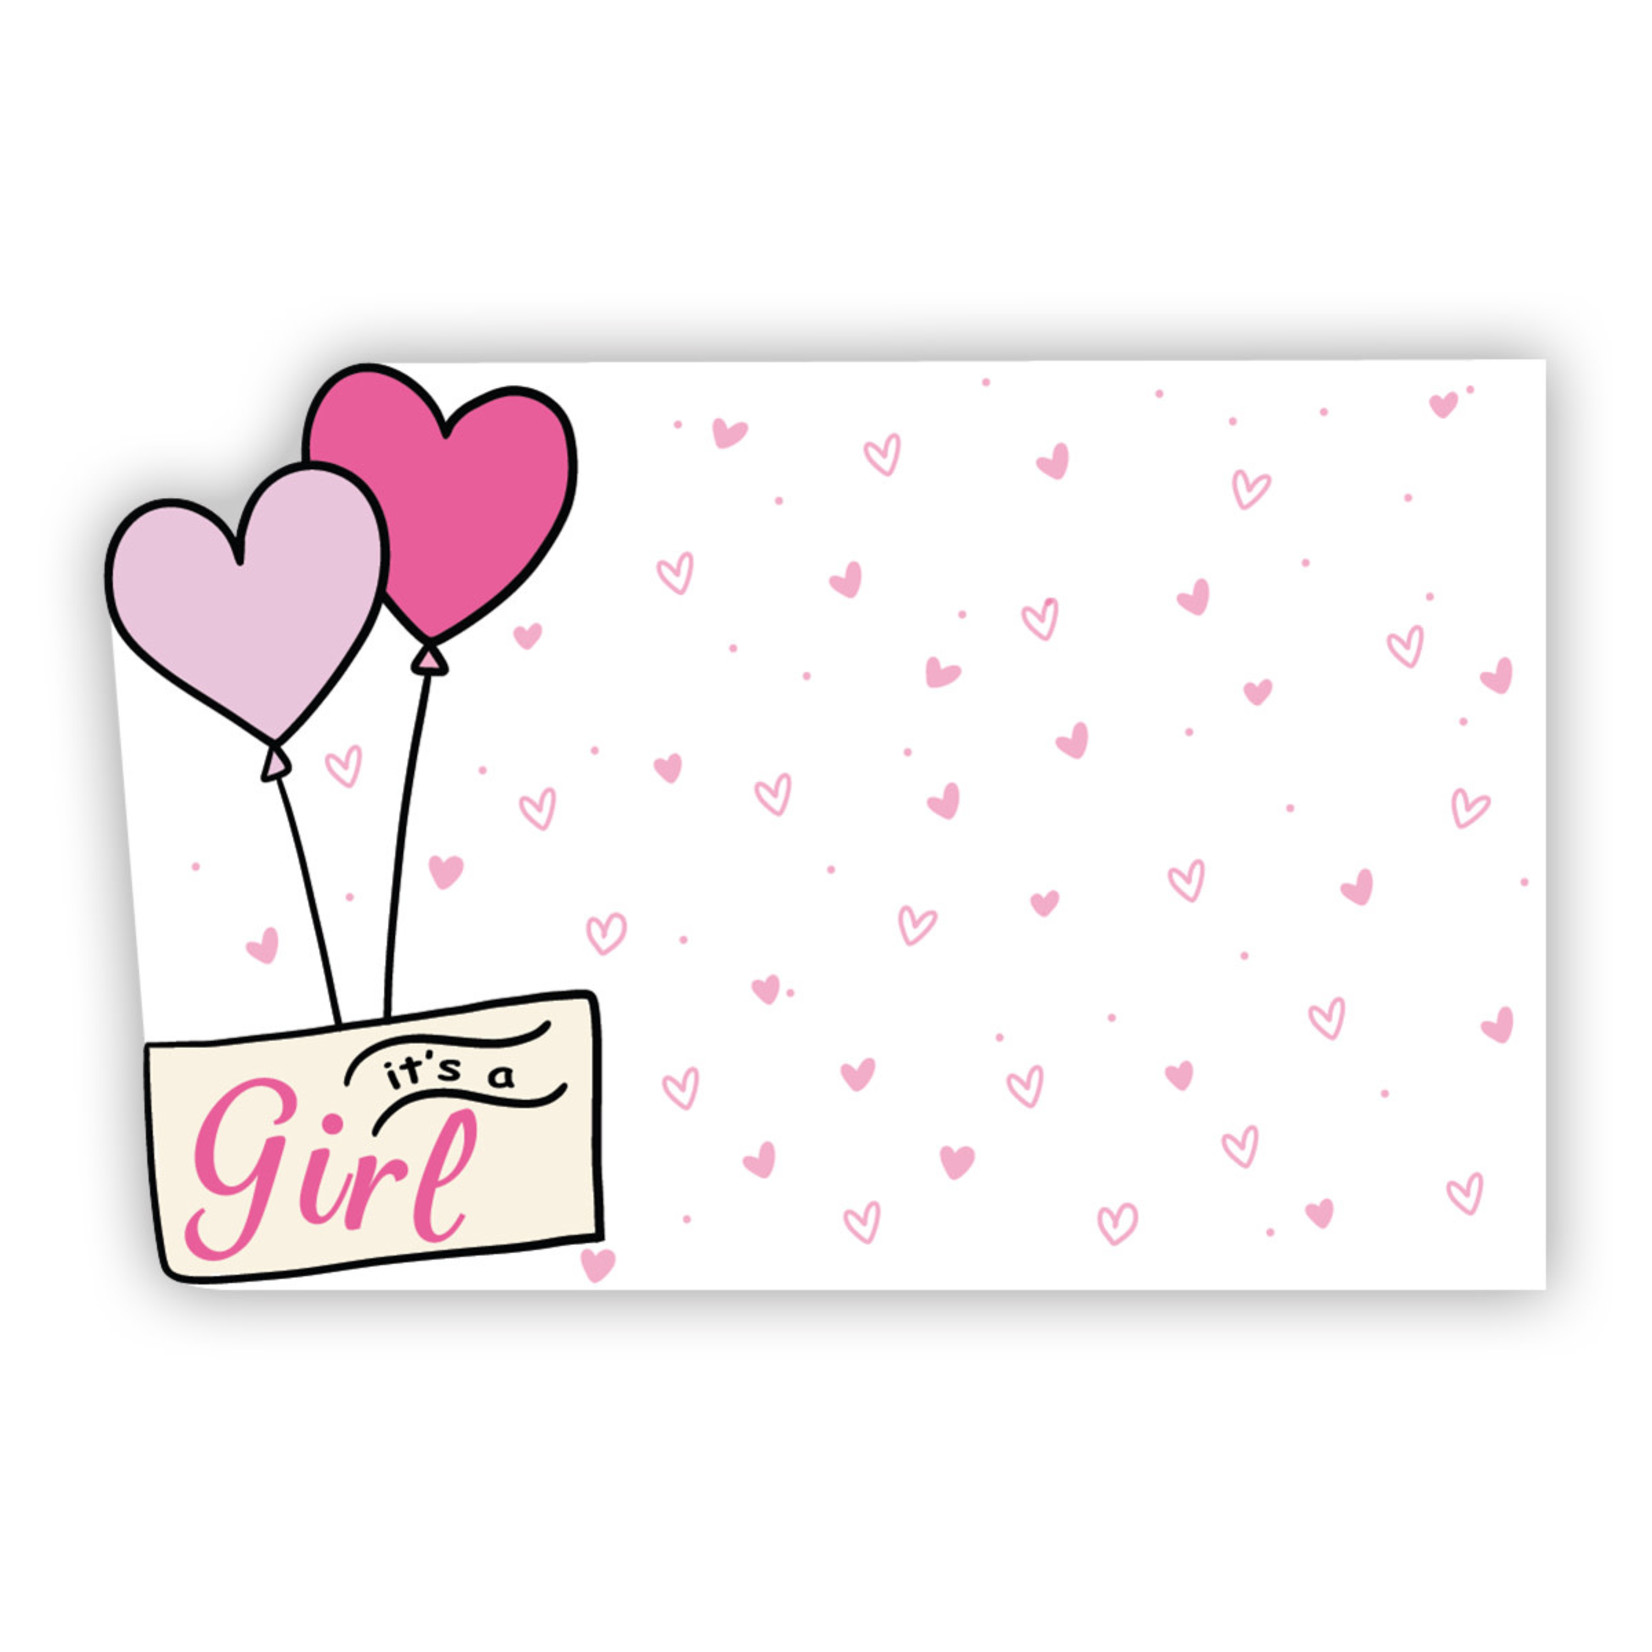 "It's a Girl!" : Pink heart balloons w foil sent